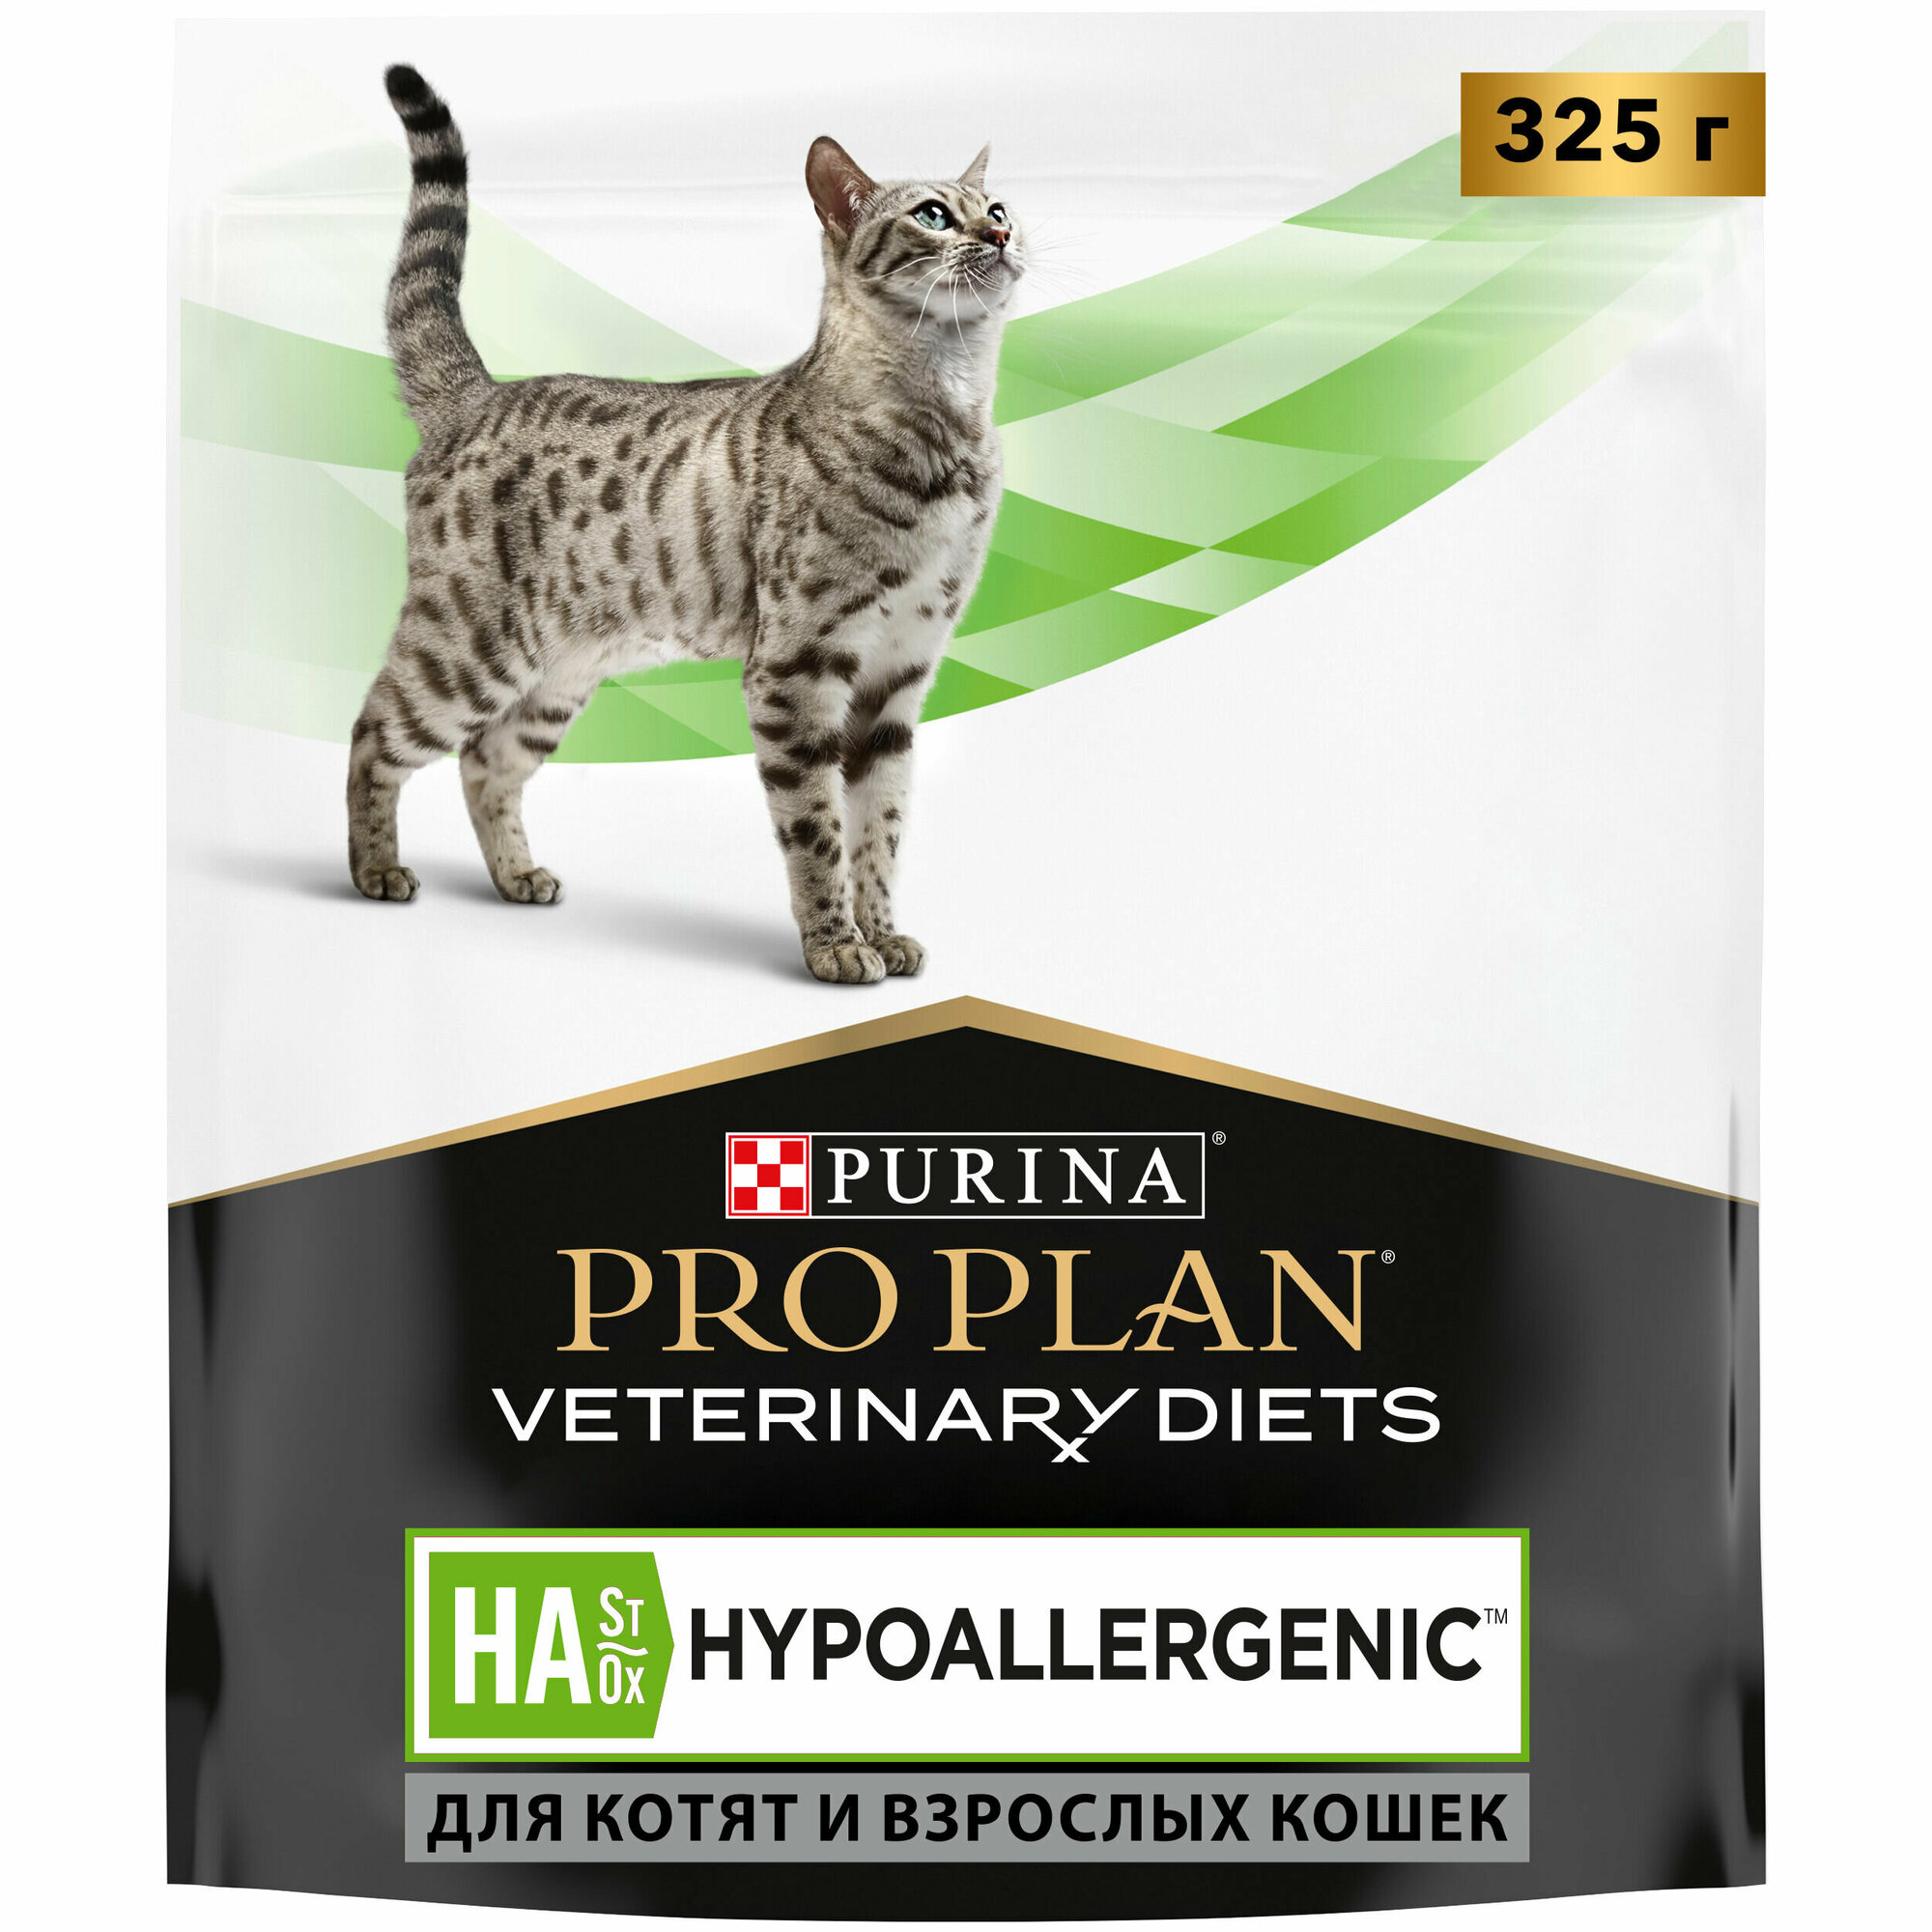 Purina Pro Plan VD HA Hypoallergenic для кошек при пищевой аллергии, 325 гр